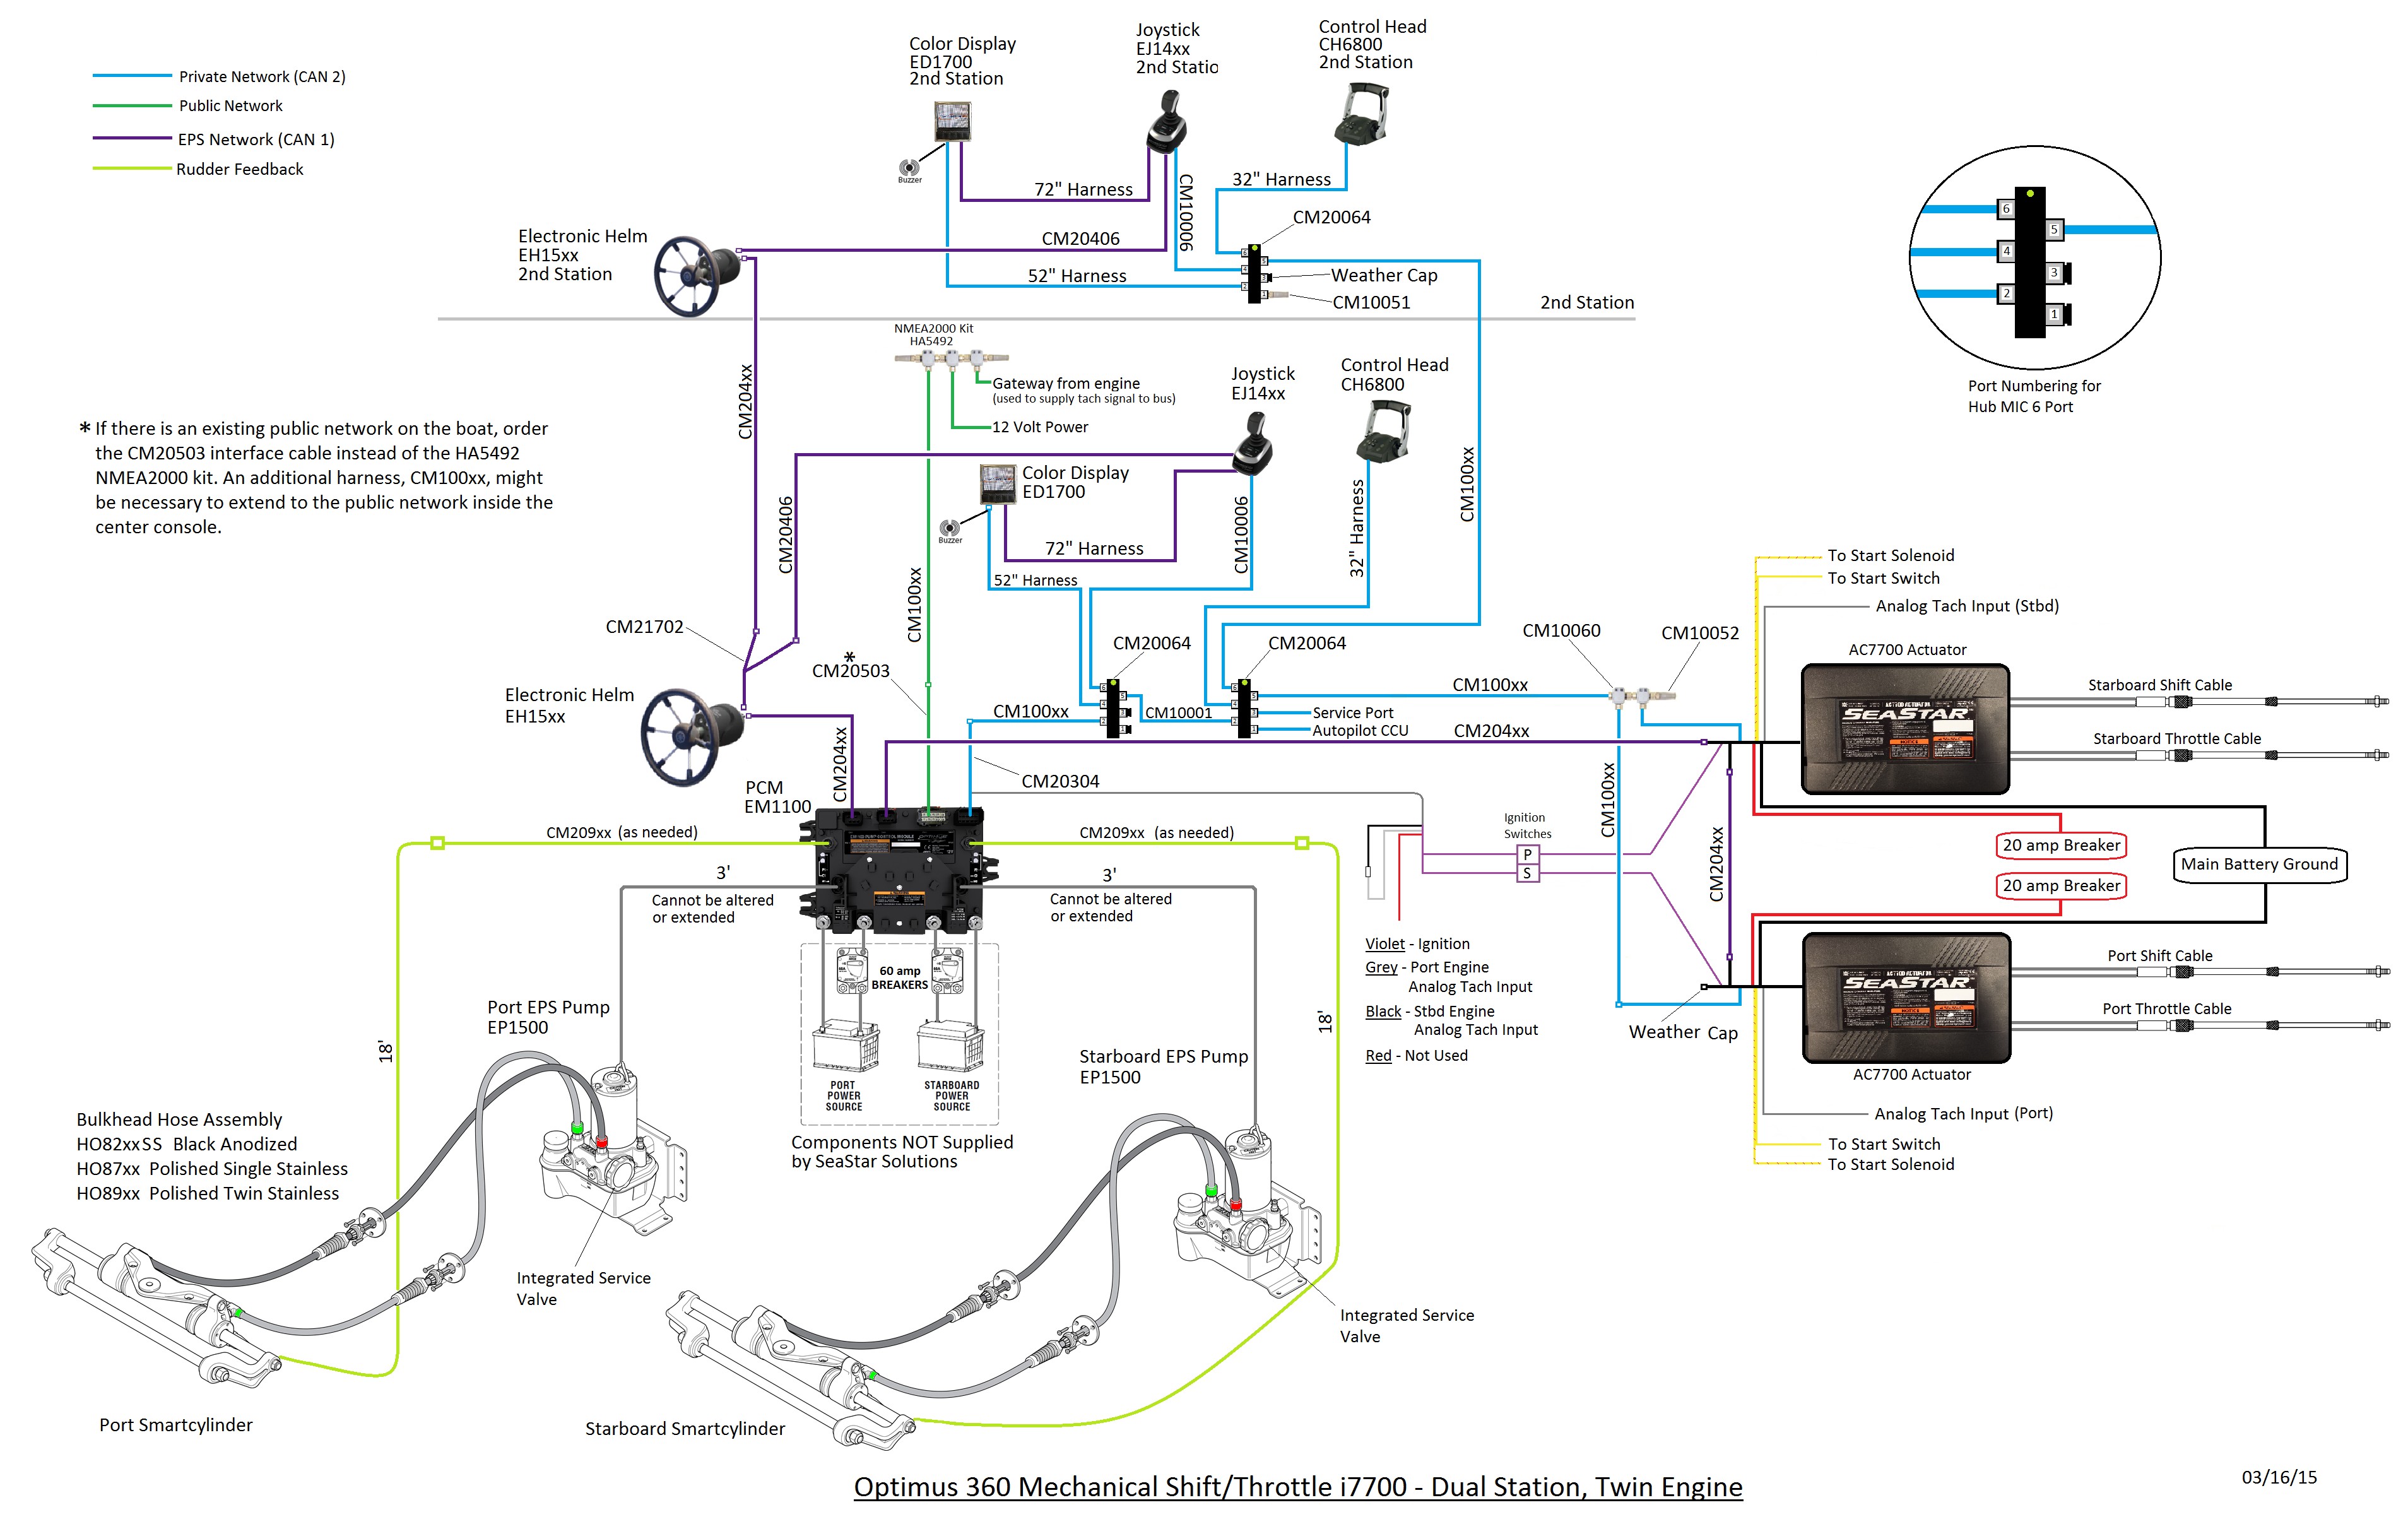 Hydraulic Steering Diagram Seastar solutions Of Hydraulic Steering Diagram